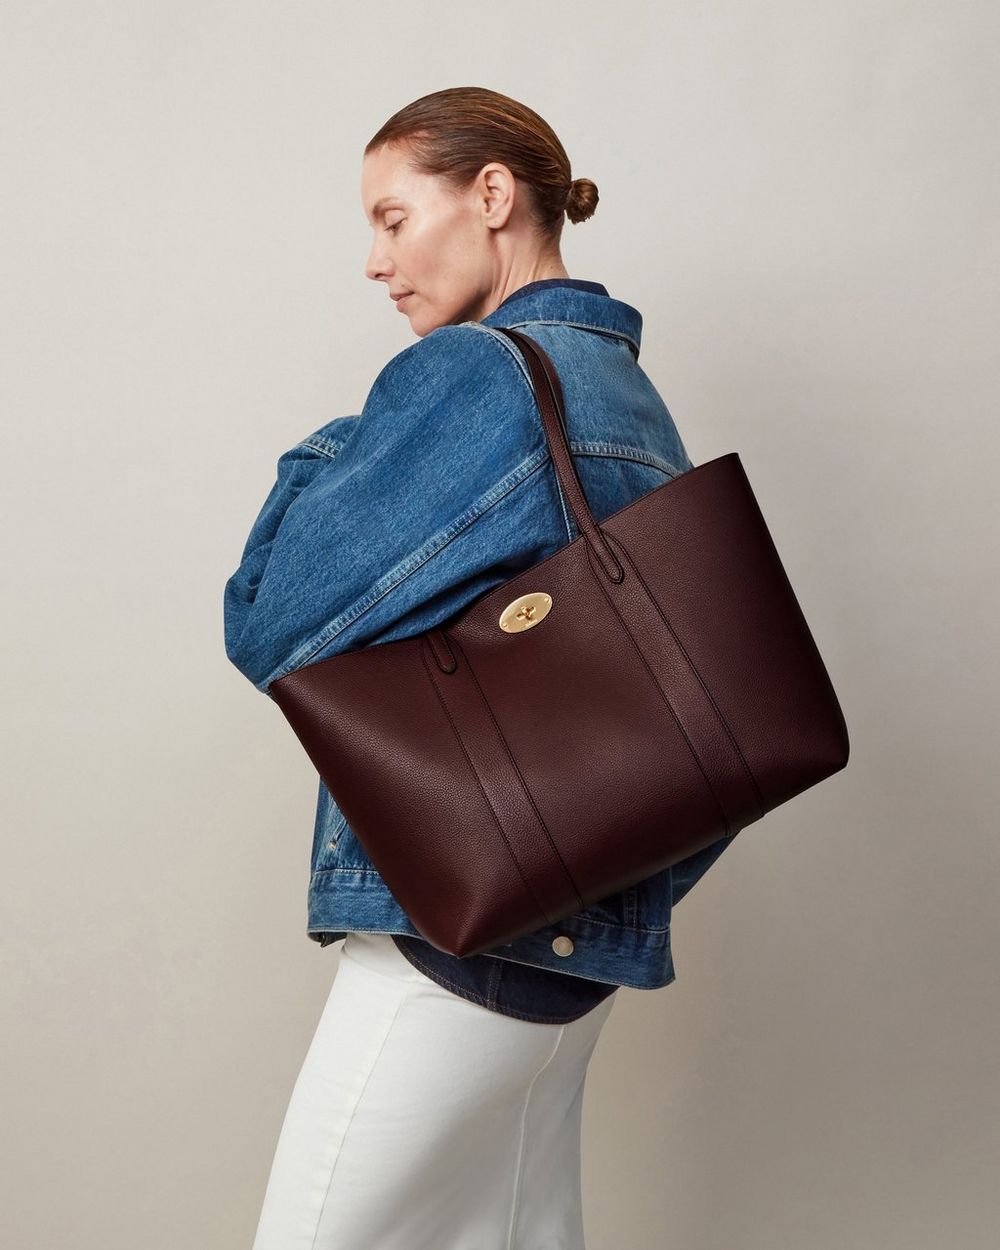 Women's Mulberry Handbags, Bags & Purses